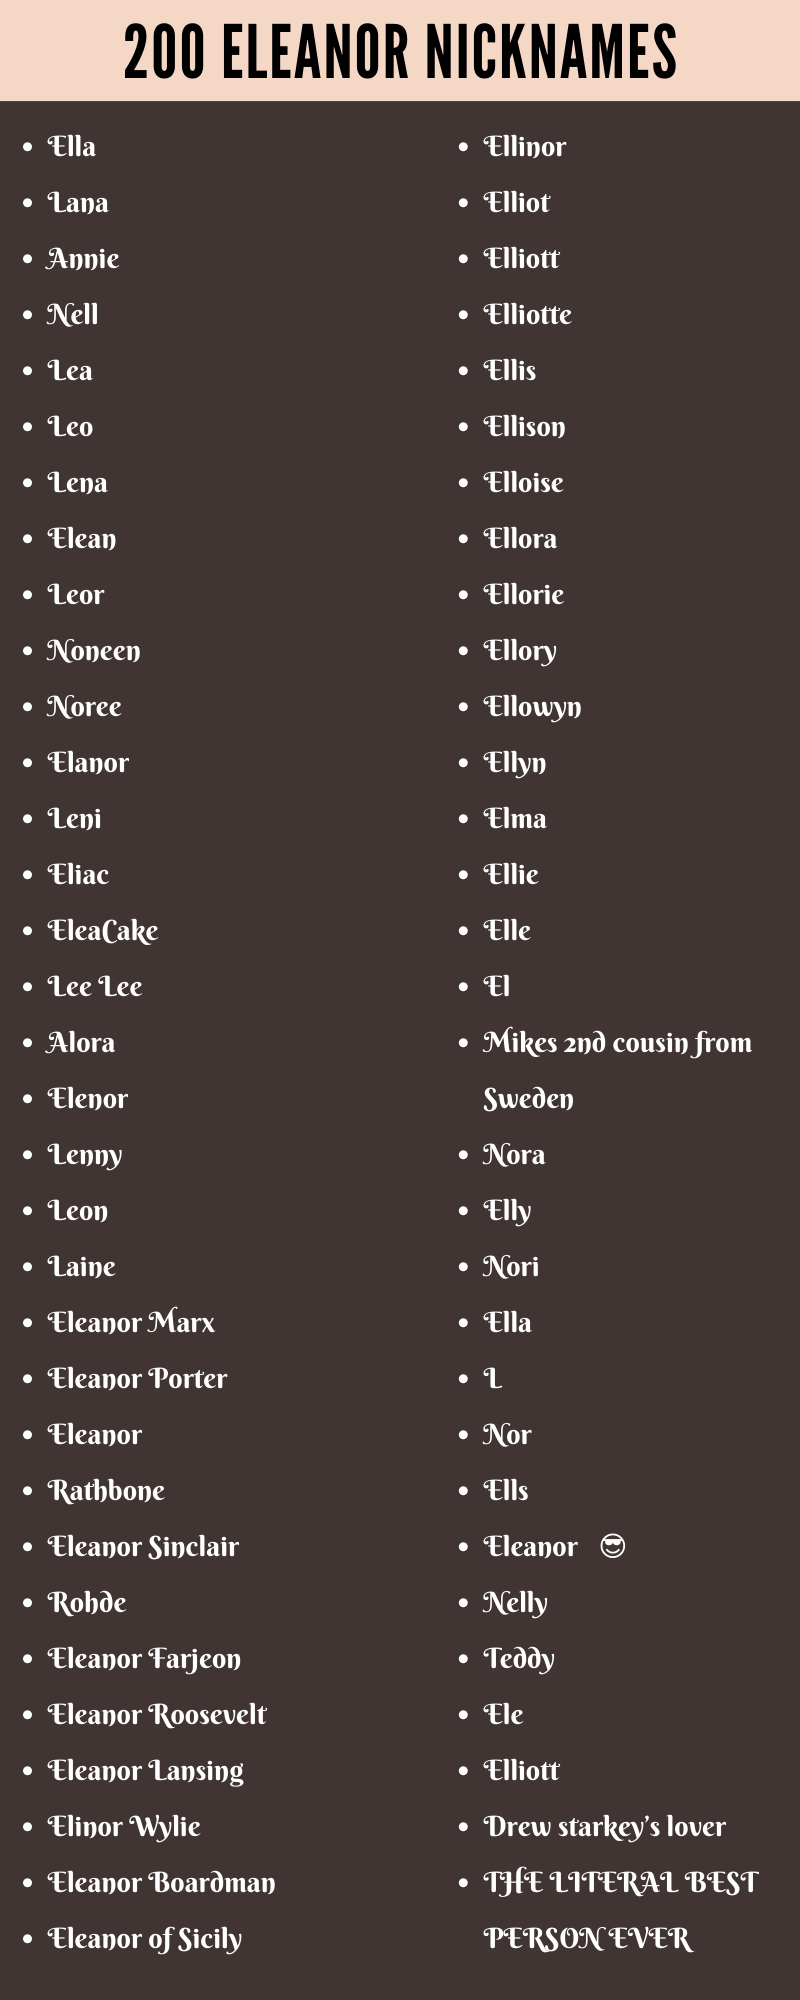 eleanor nicknames